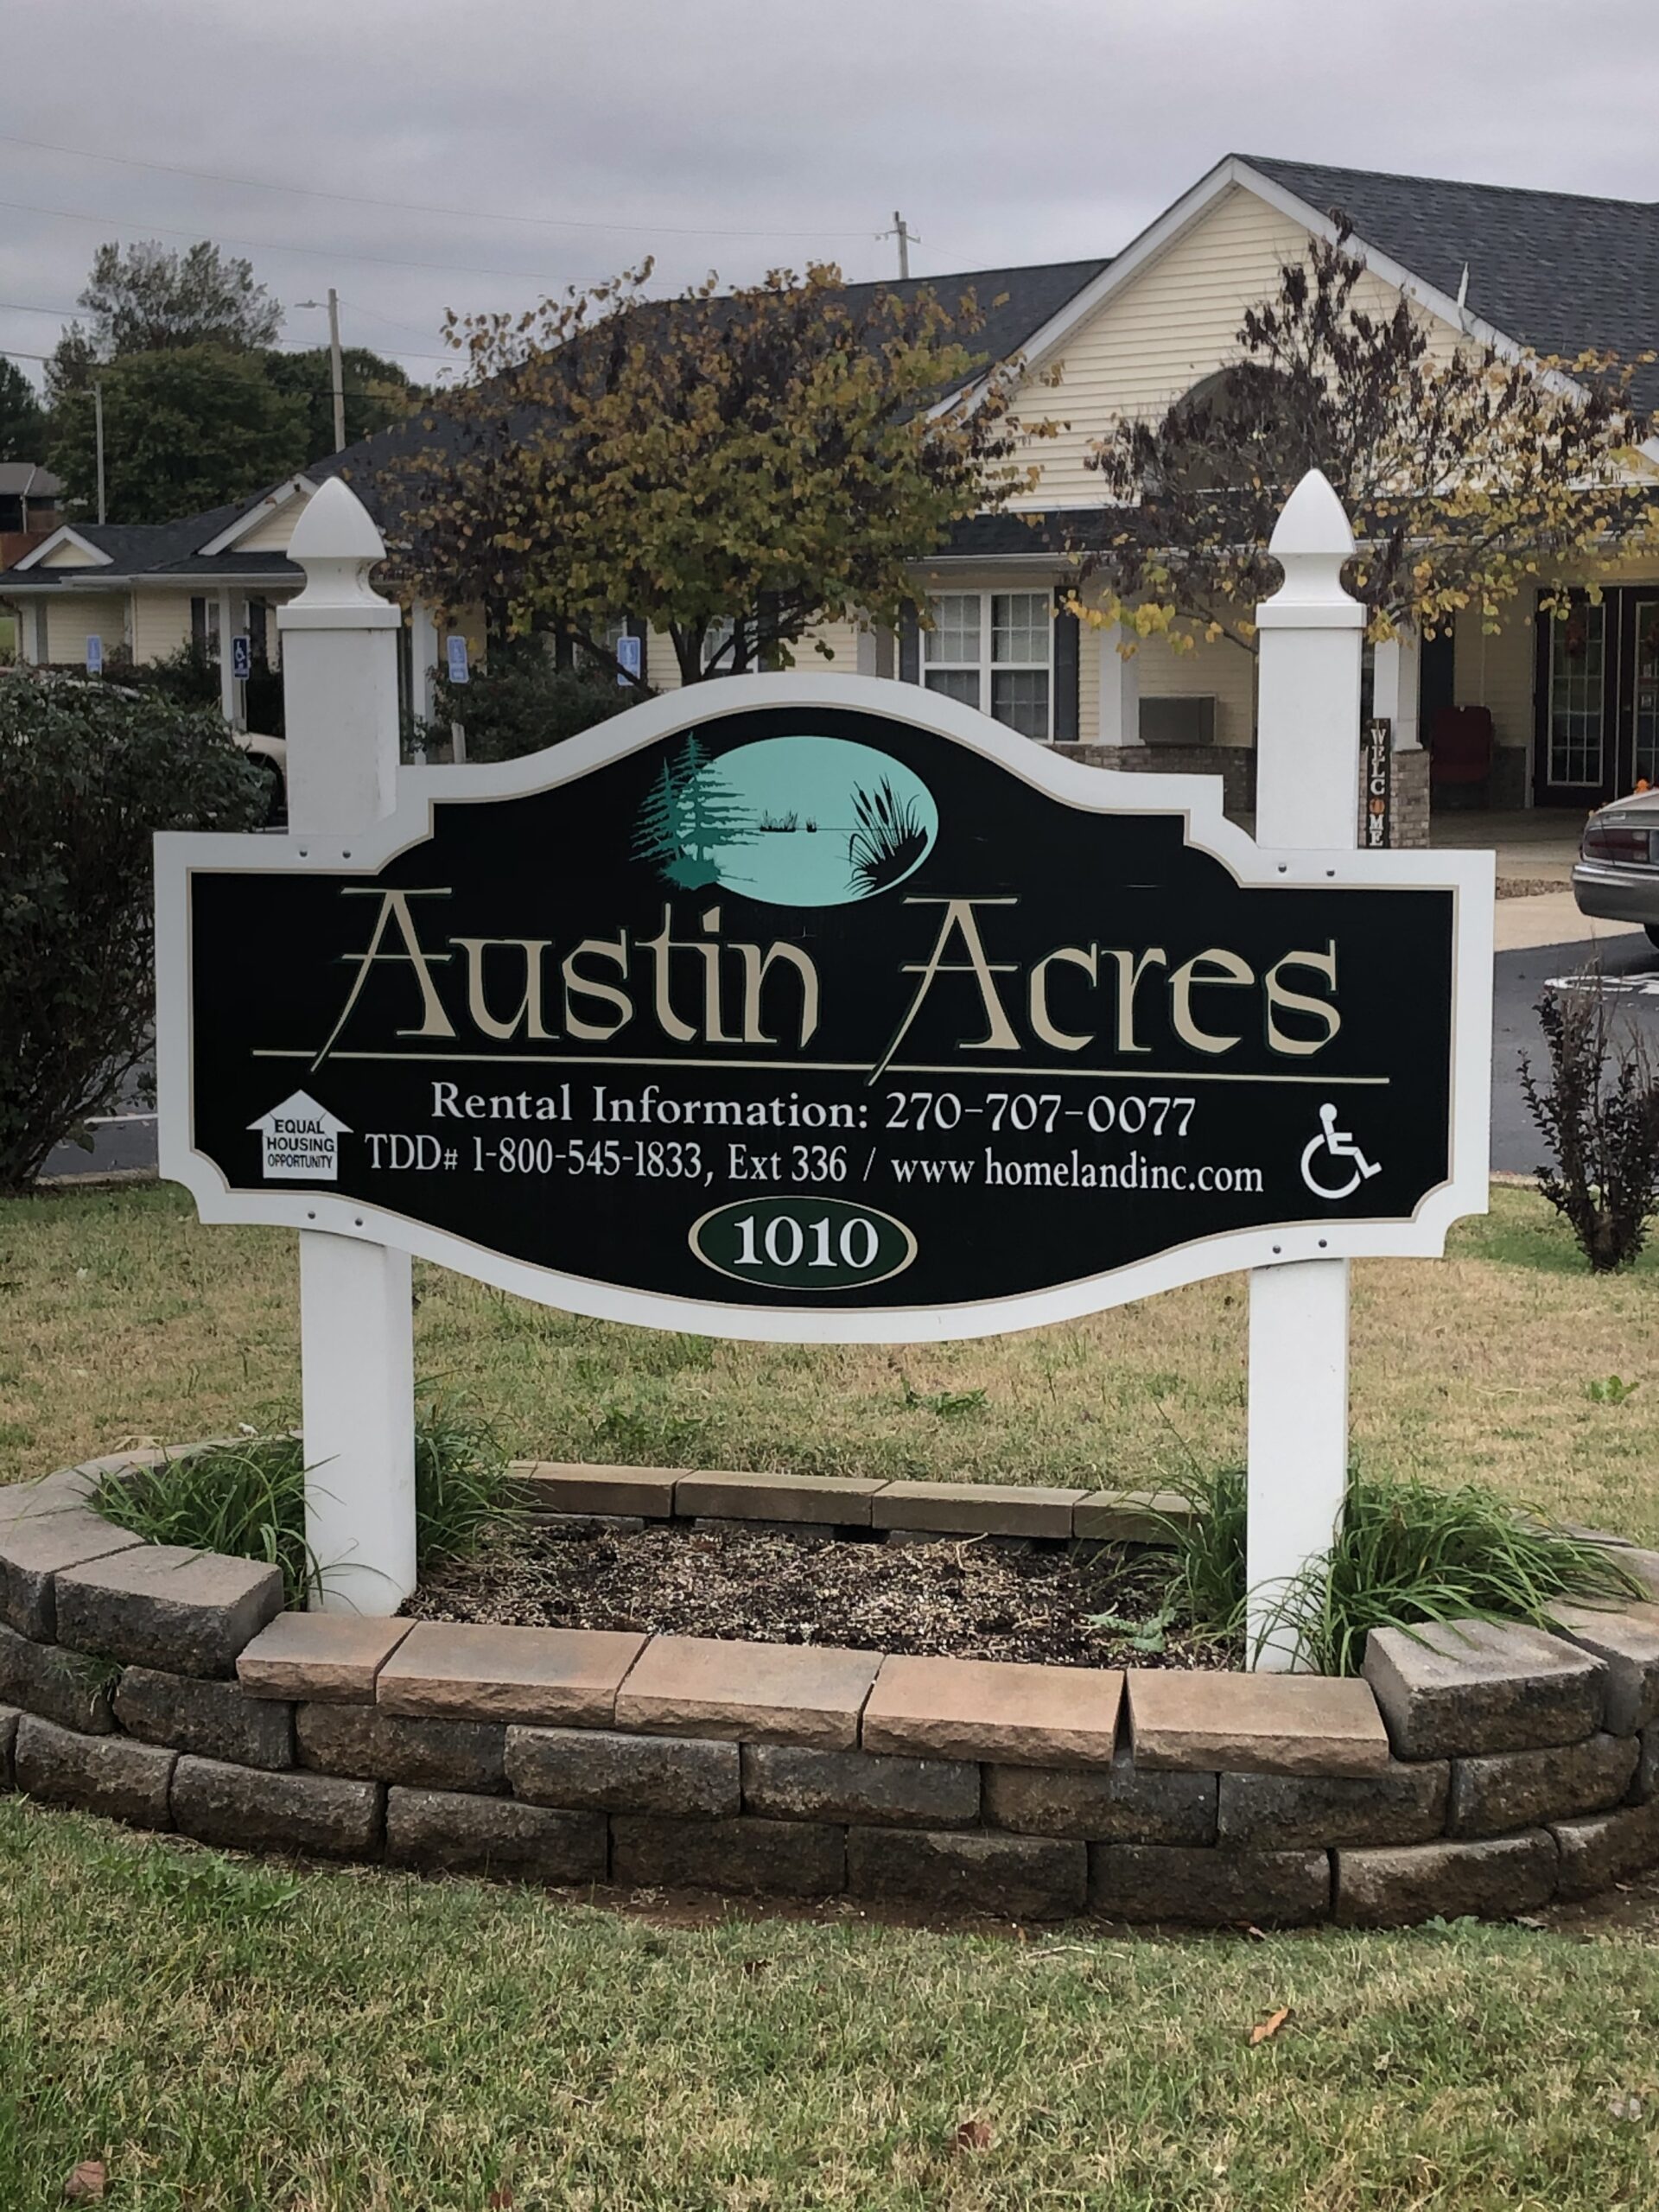 Austin Acres